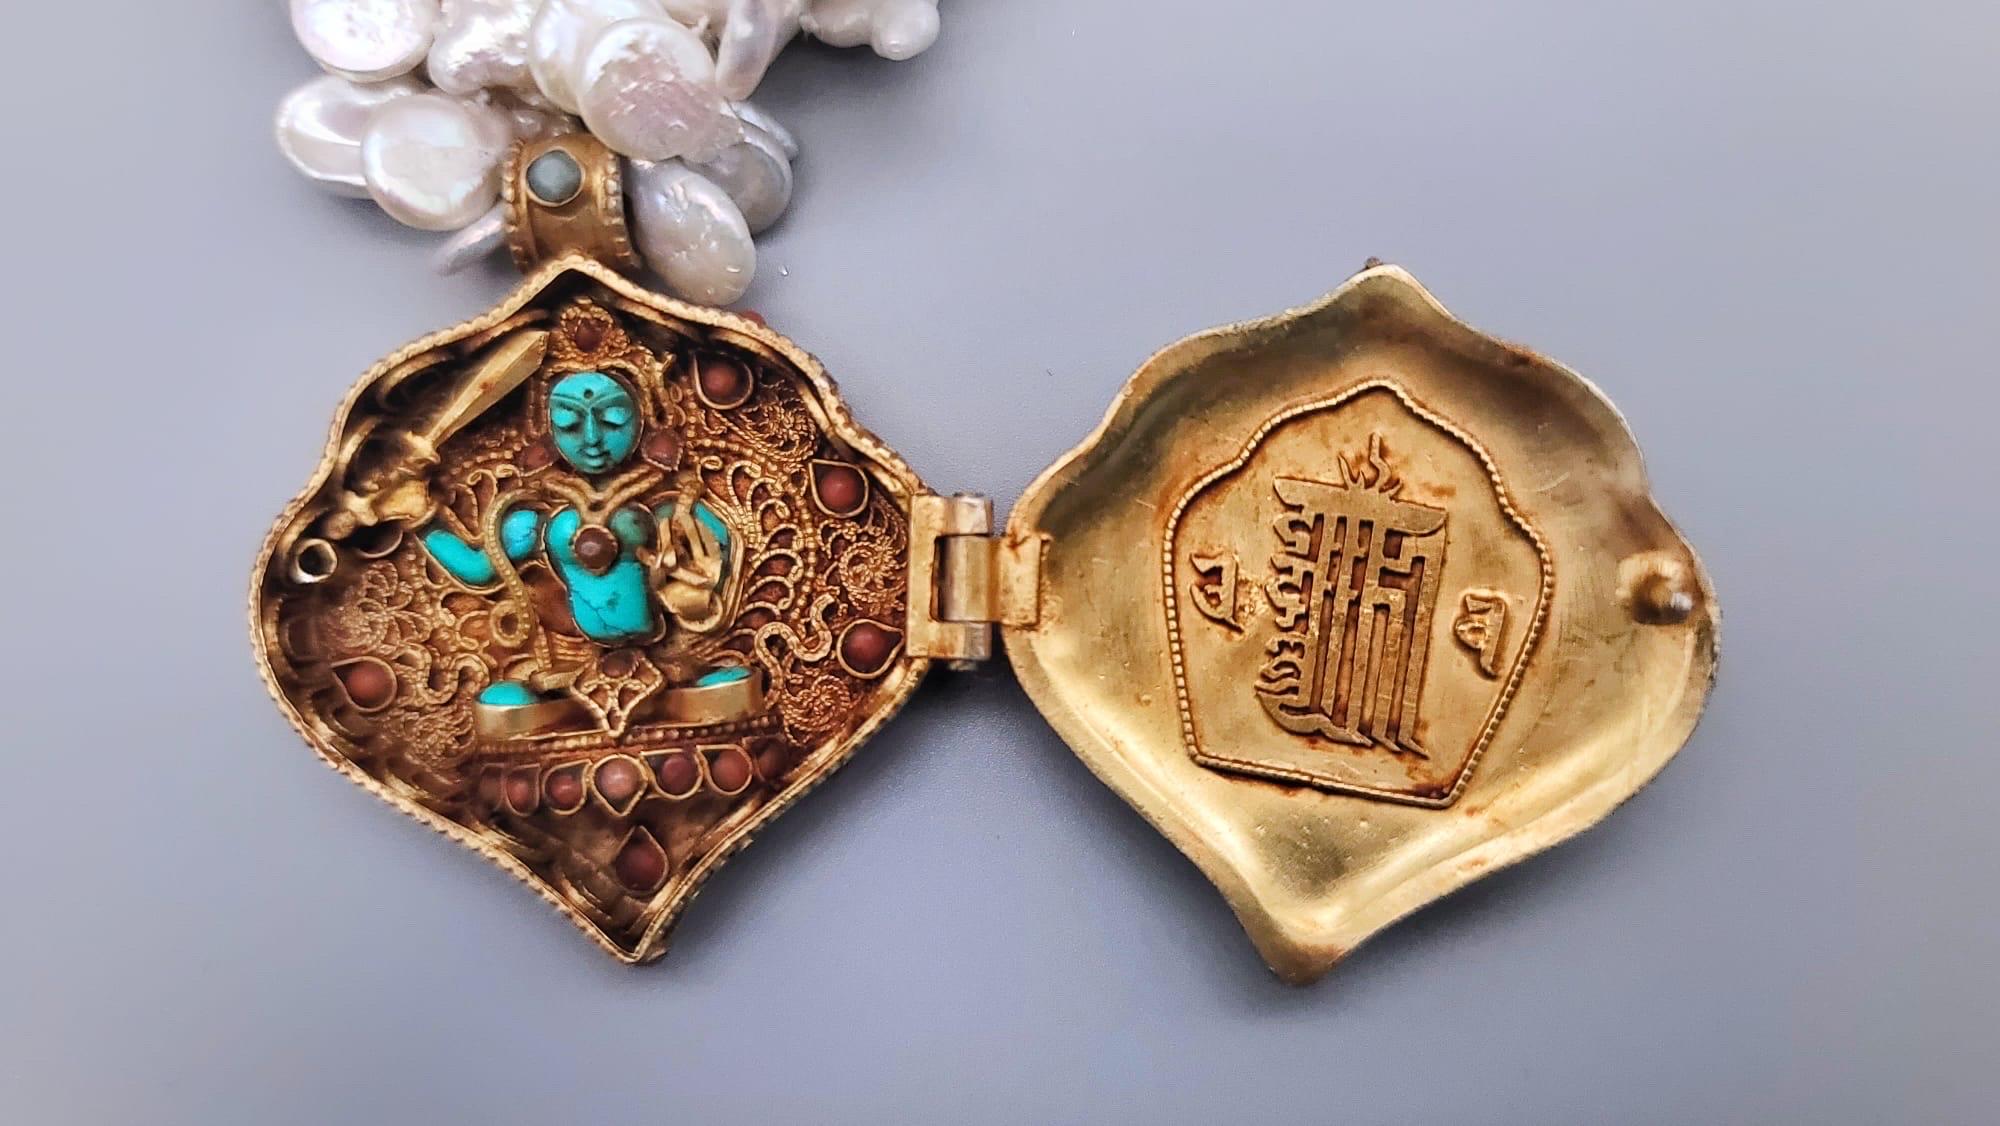 A.Jeschel  Magnificent Tibetan Ghau prayer box and Pearls necklace For Sale 8